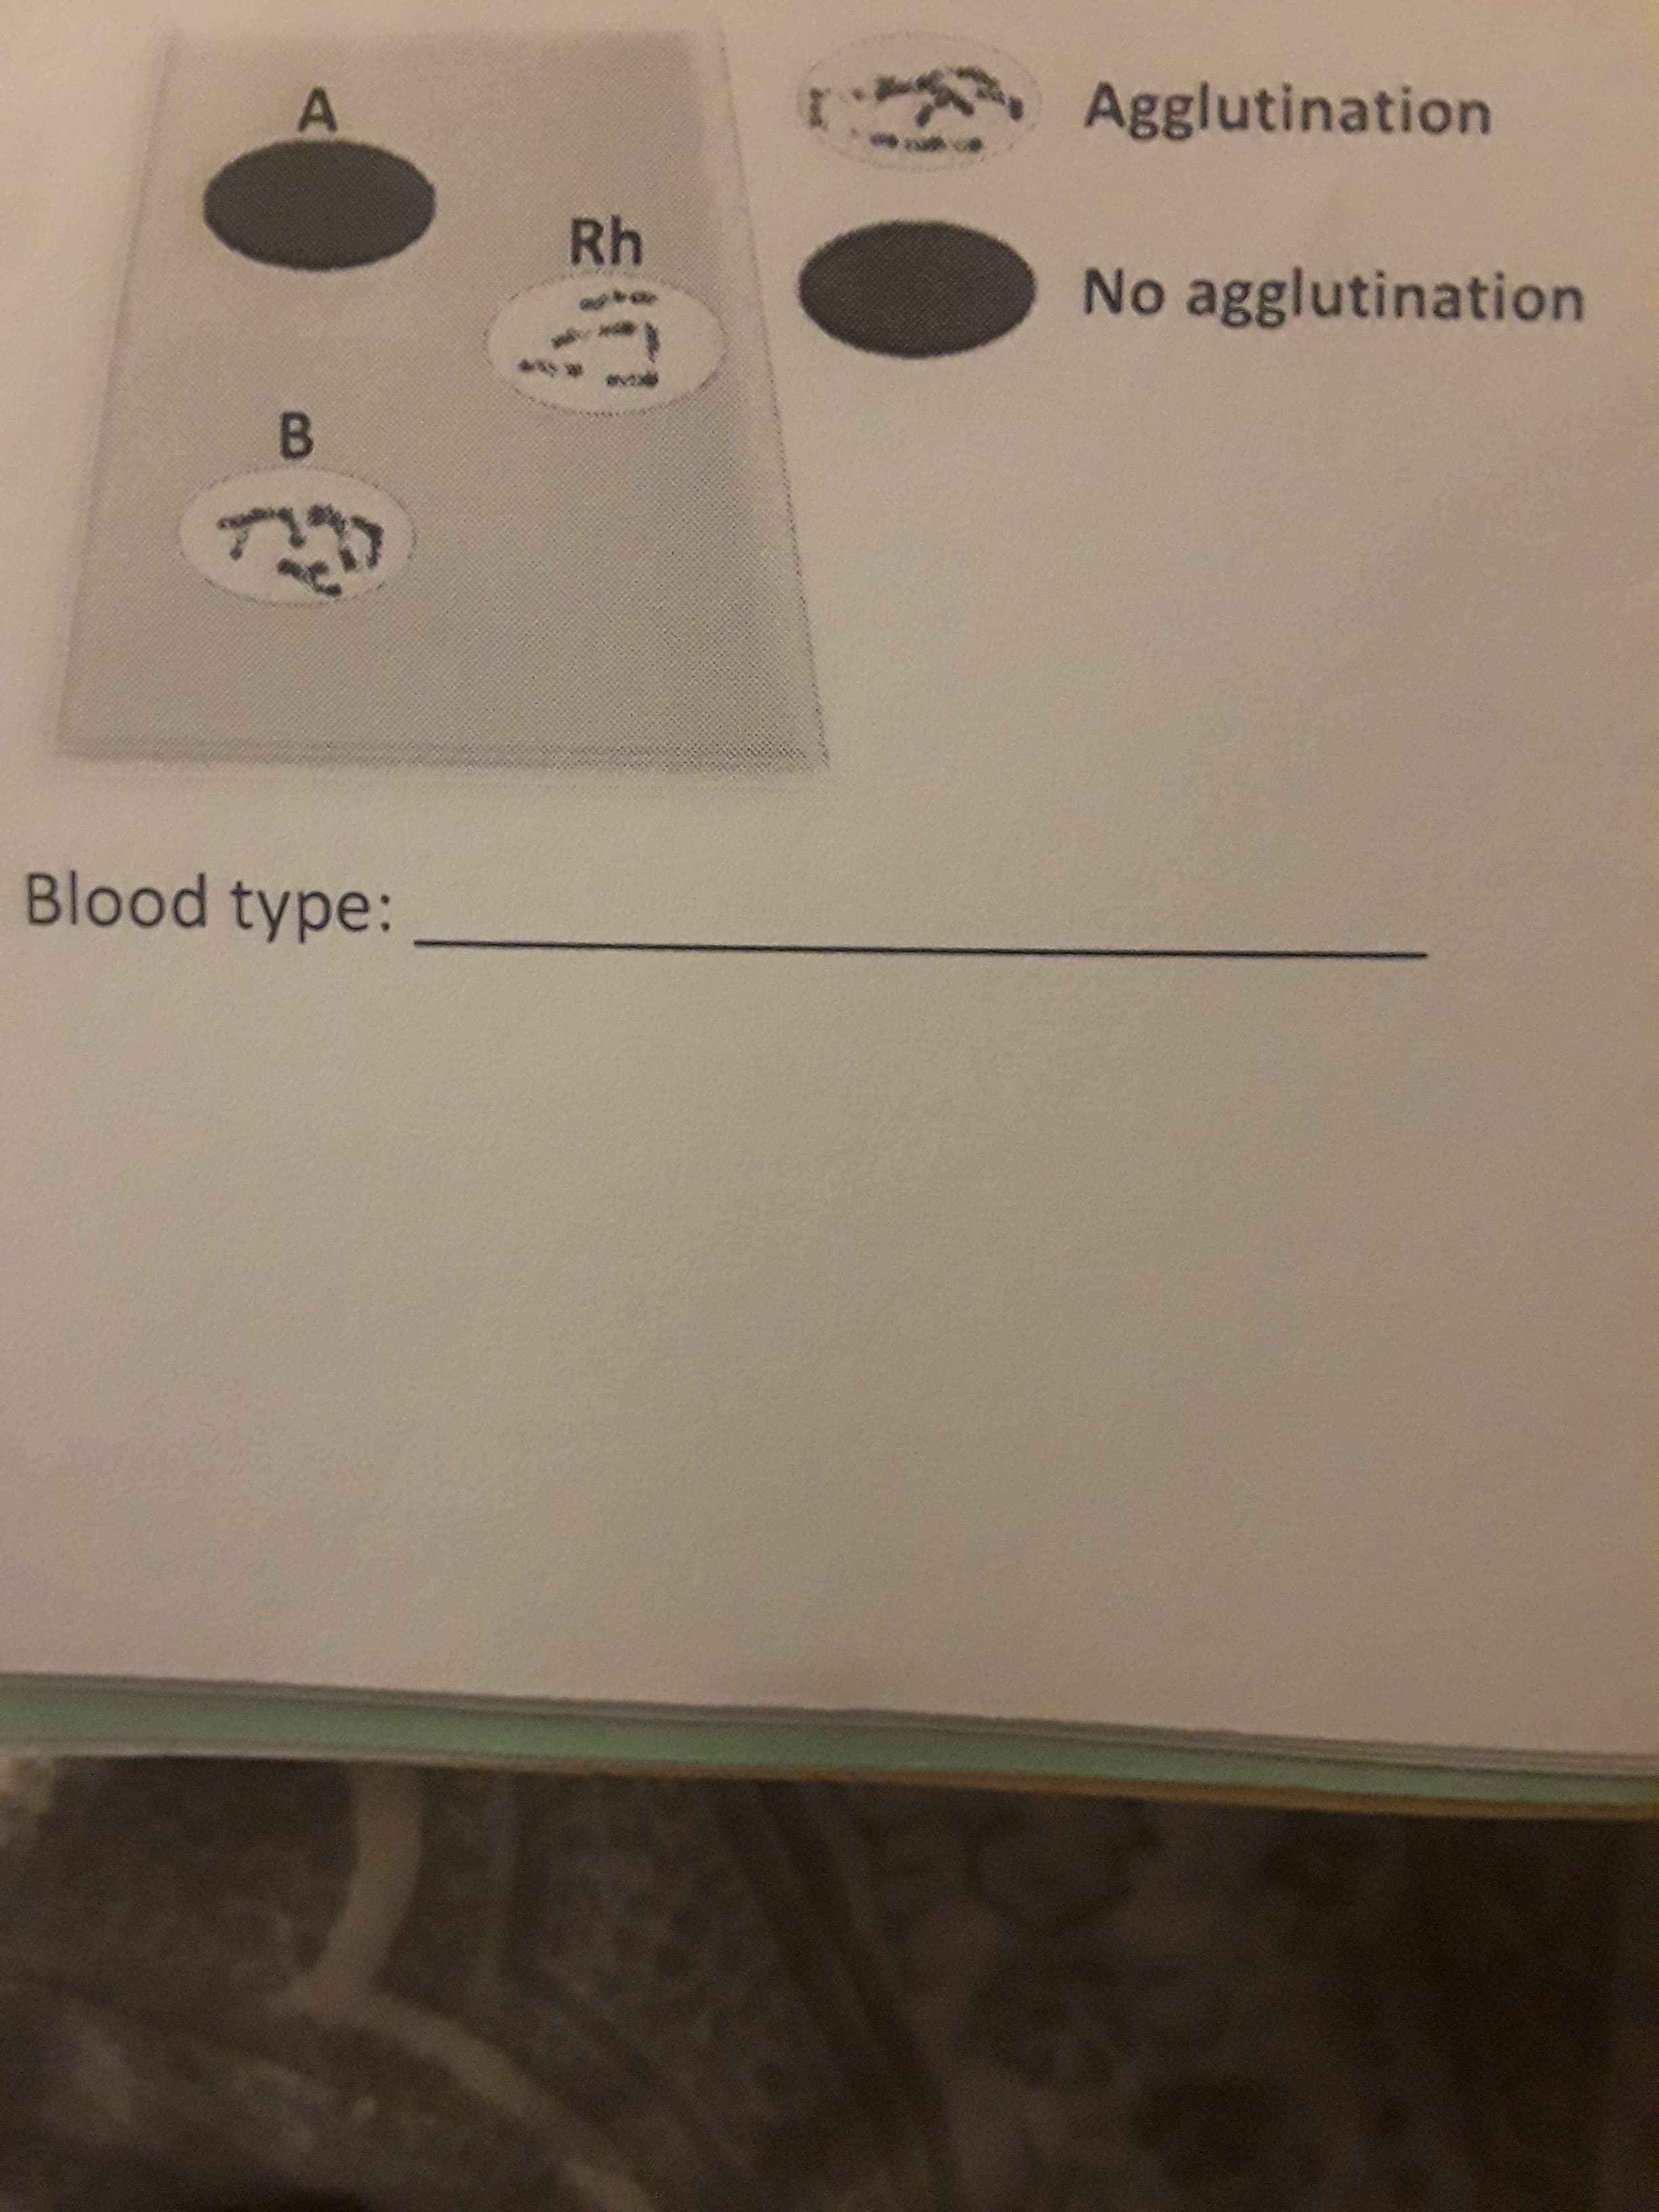 Agglutination
8b
Rh
No agglutination
Blood type:
